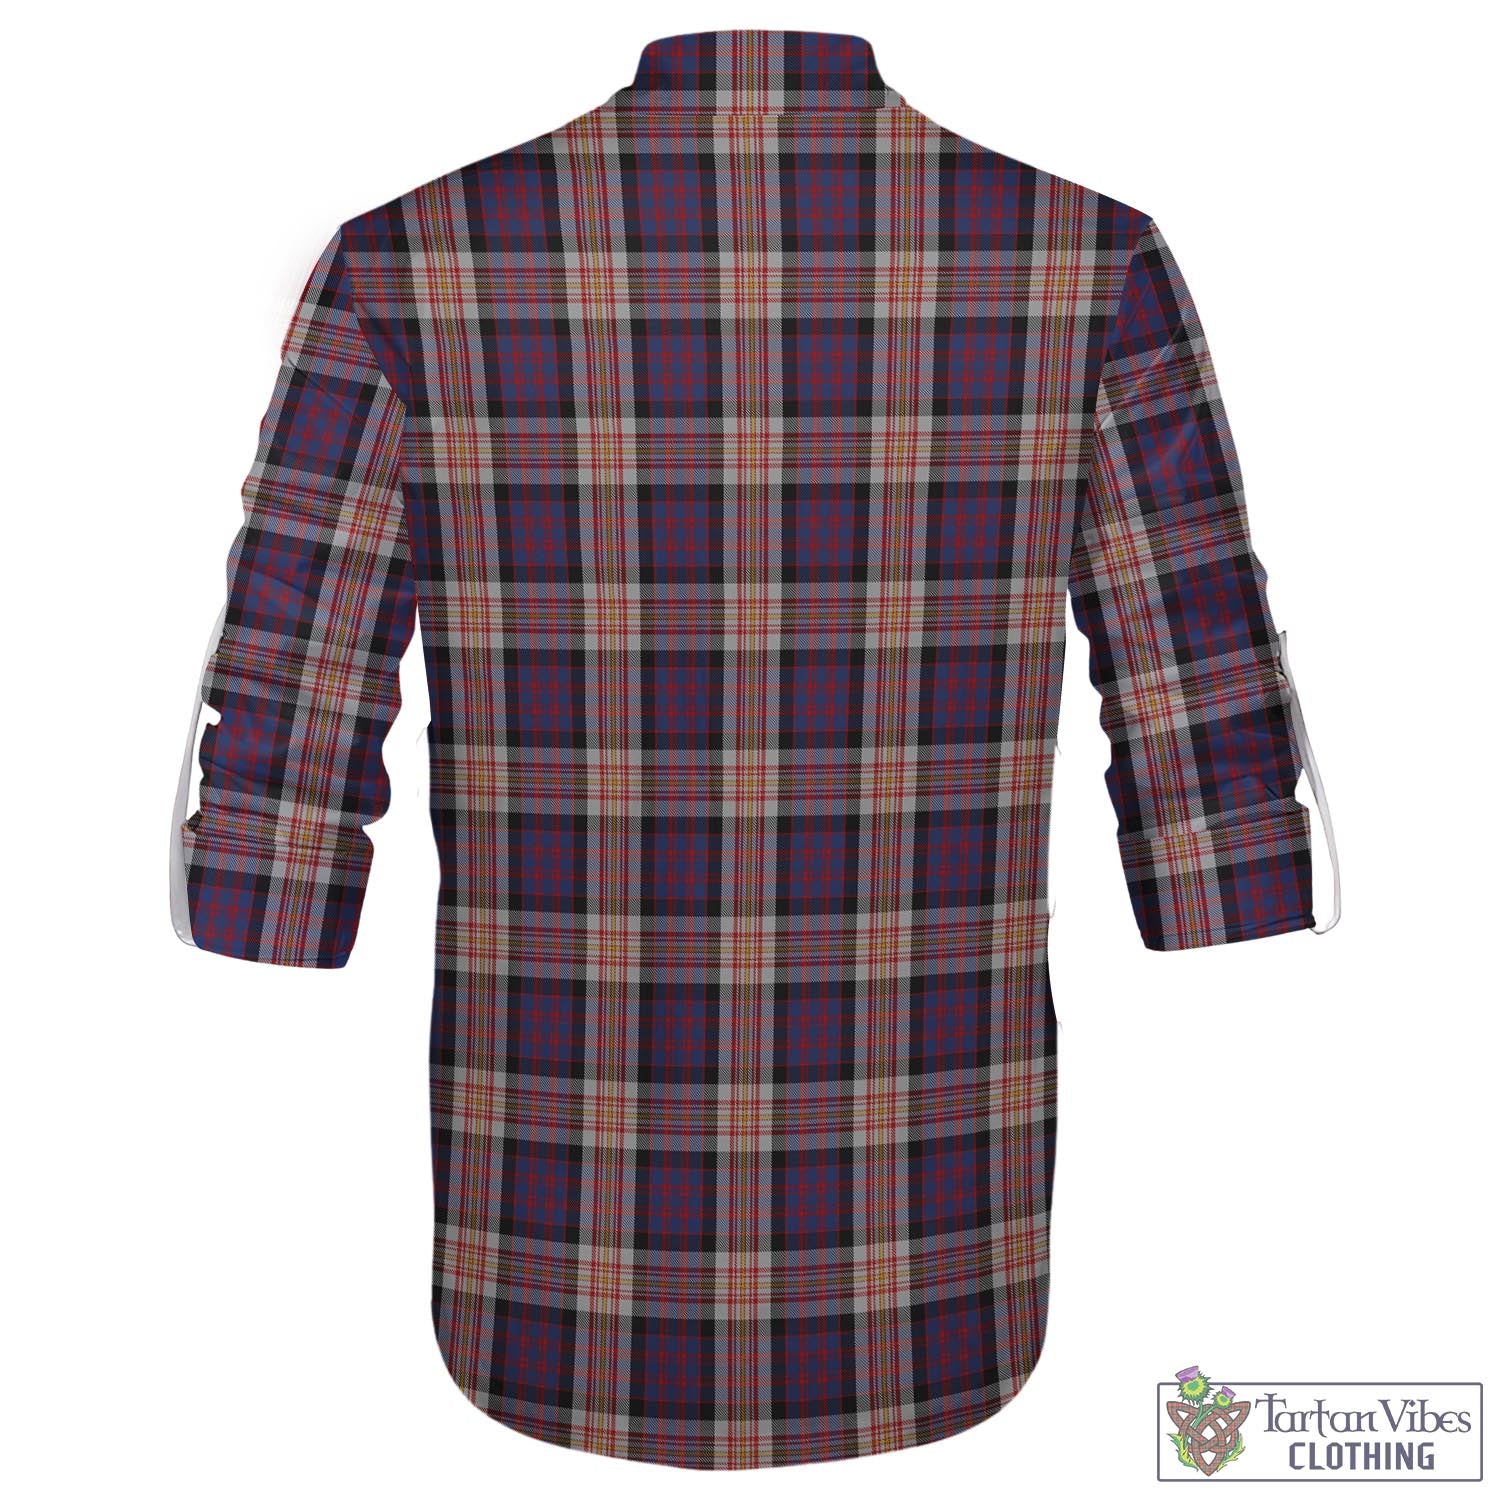 Tartan Vibes Clothing Carnegie Tartan Men's Scottish Traditional Jacobite Ghillie Kilt Shirt with Family Crest